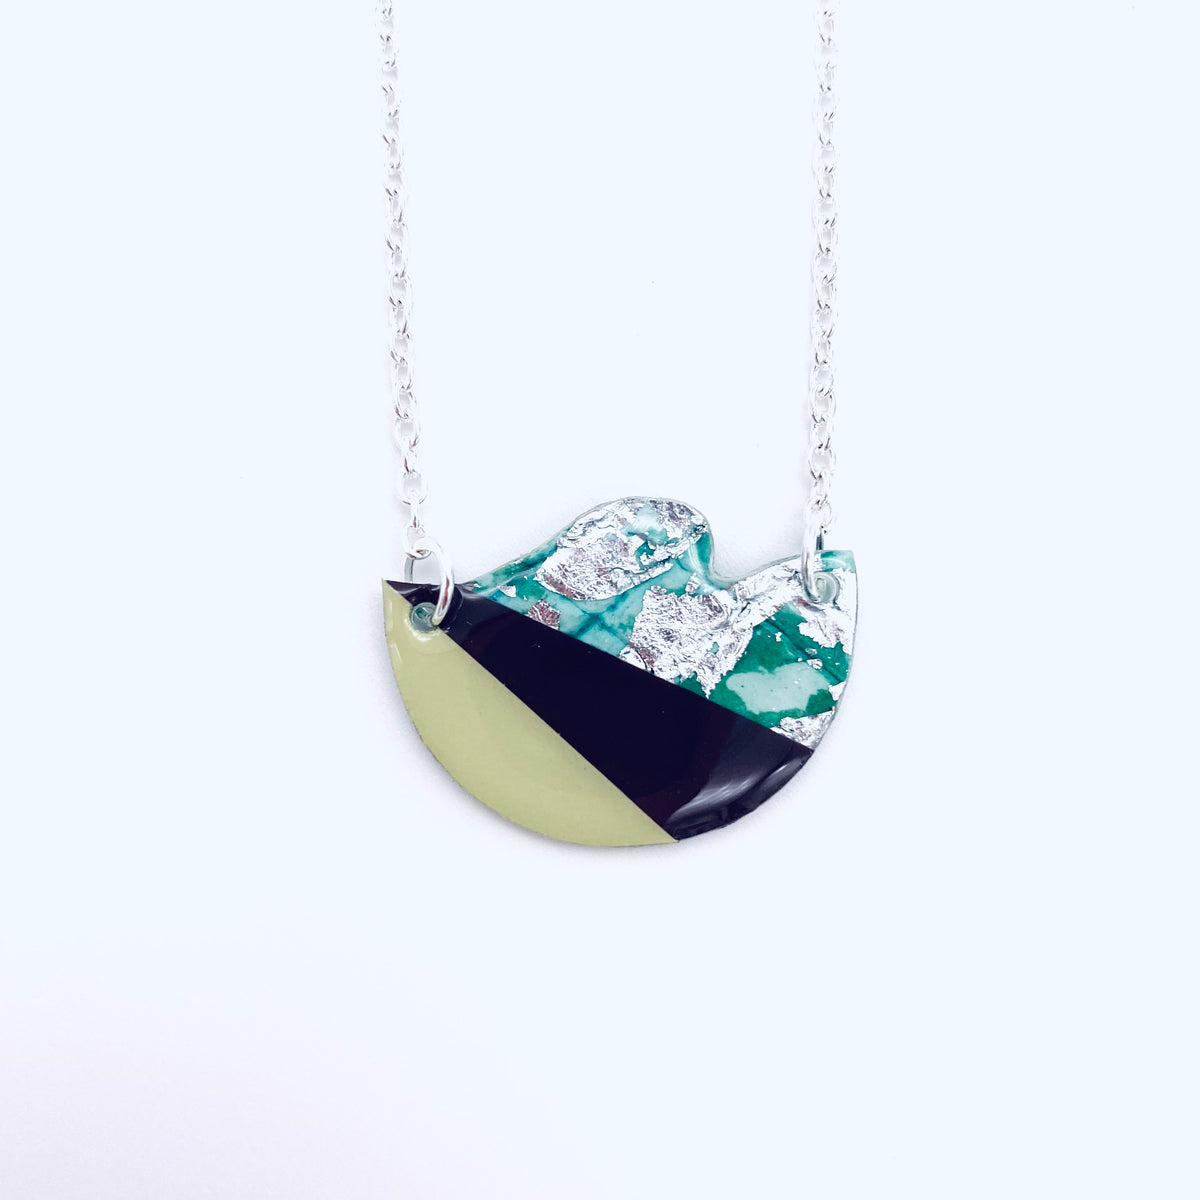 Tonn sgraffito necklace in celadon/grape/lichen/silver